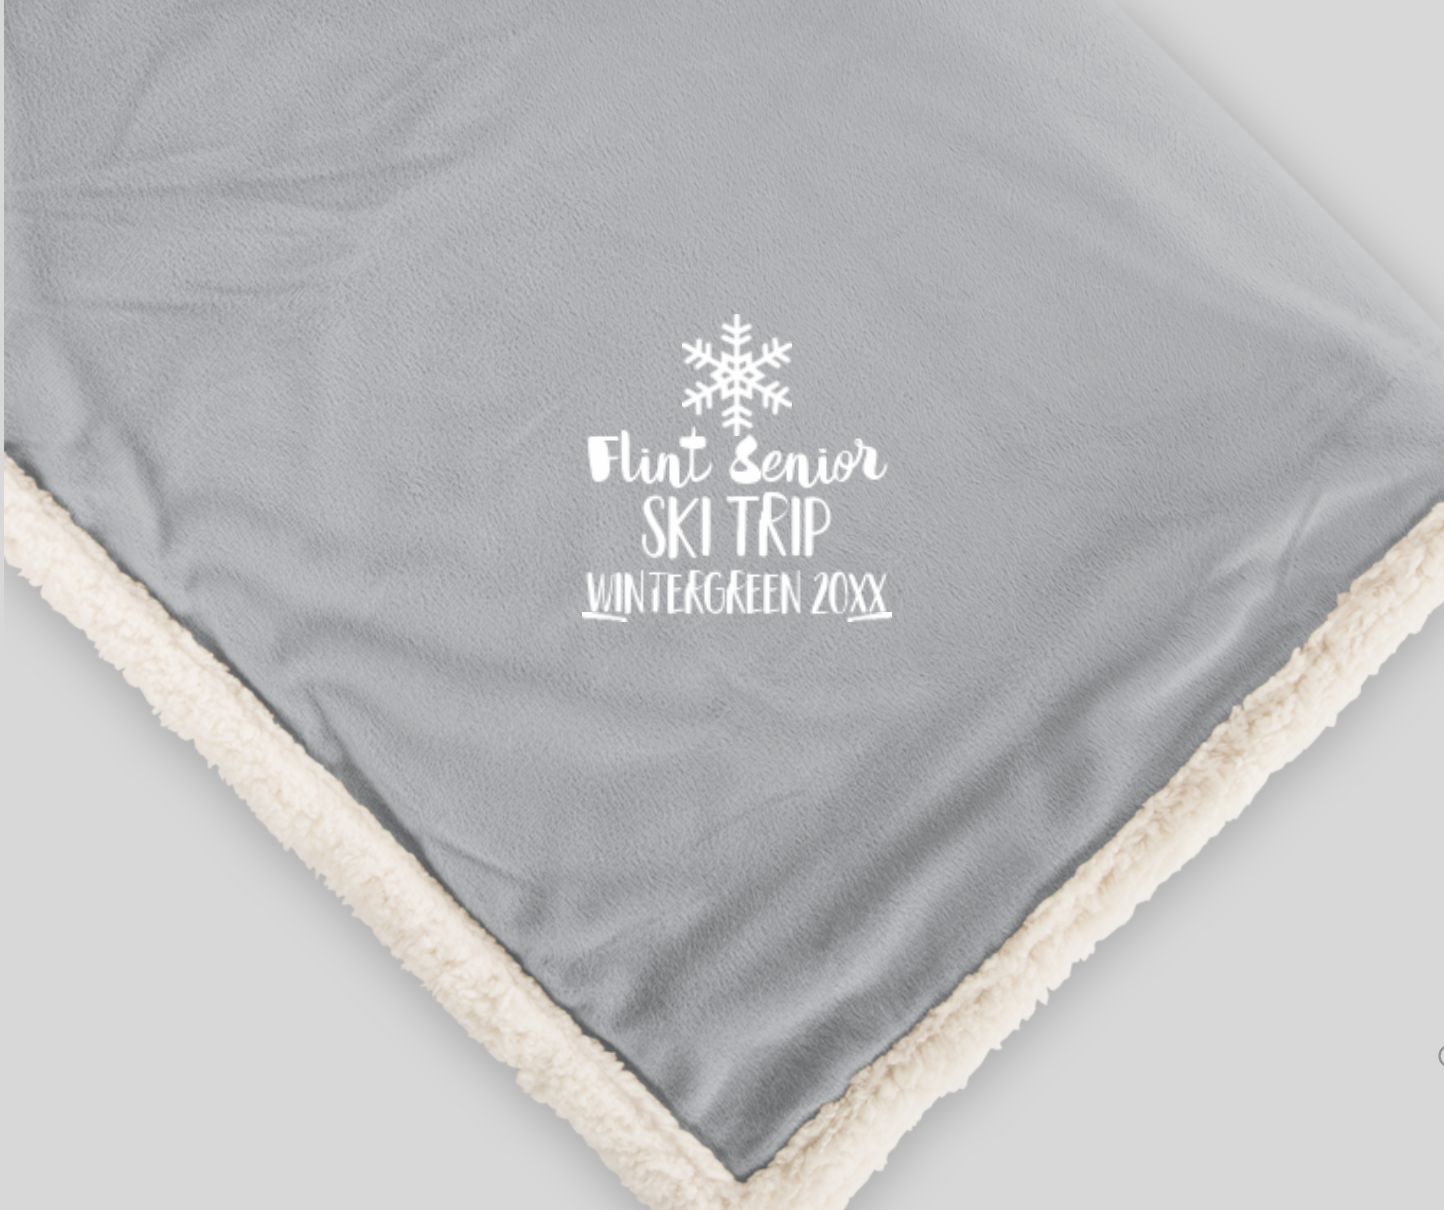 custom sherpa blanket with the words "flint senior ski trip wintergreen 20xx" and a snowflake